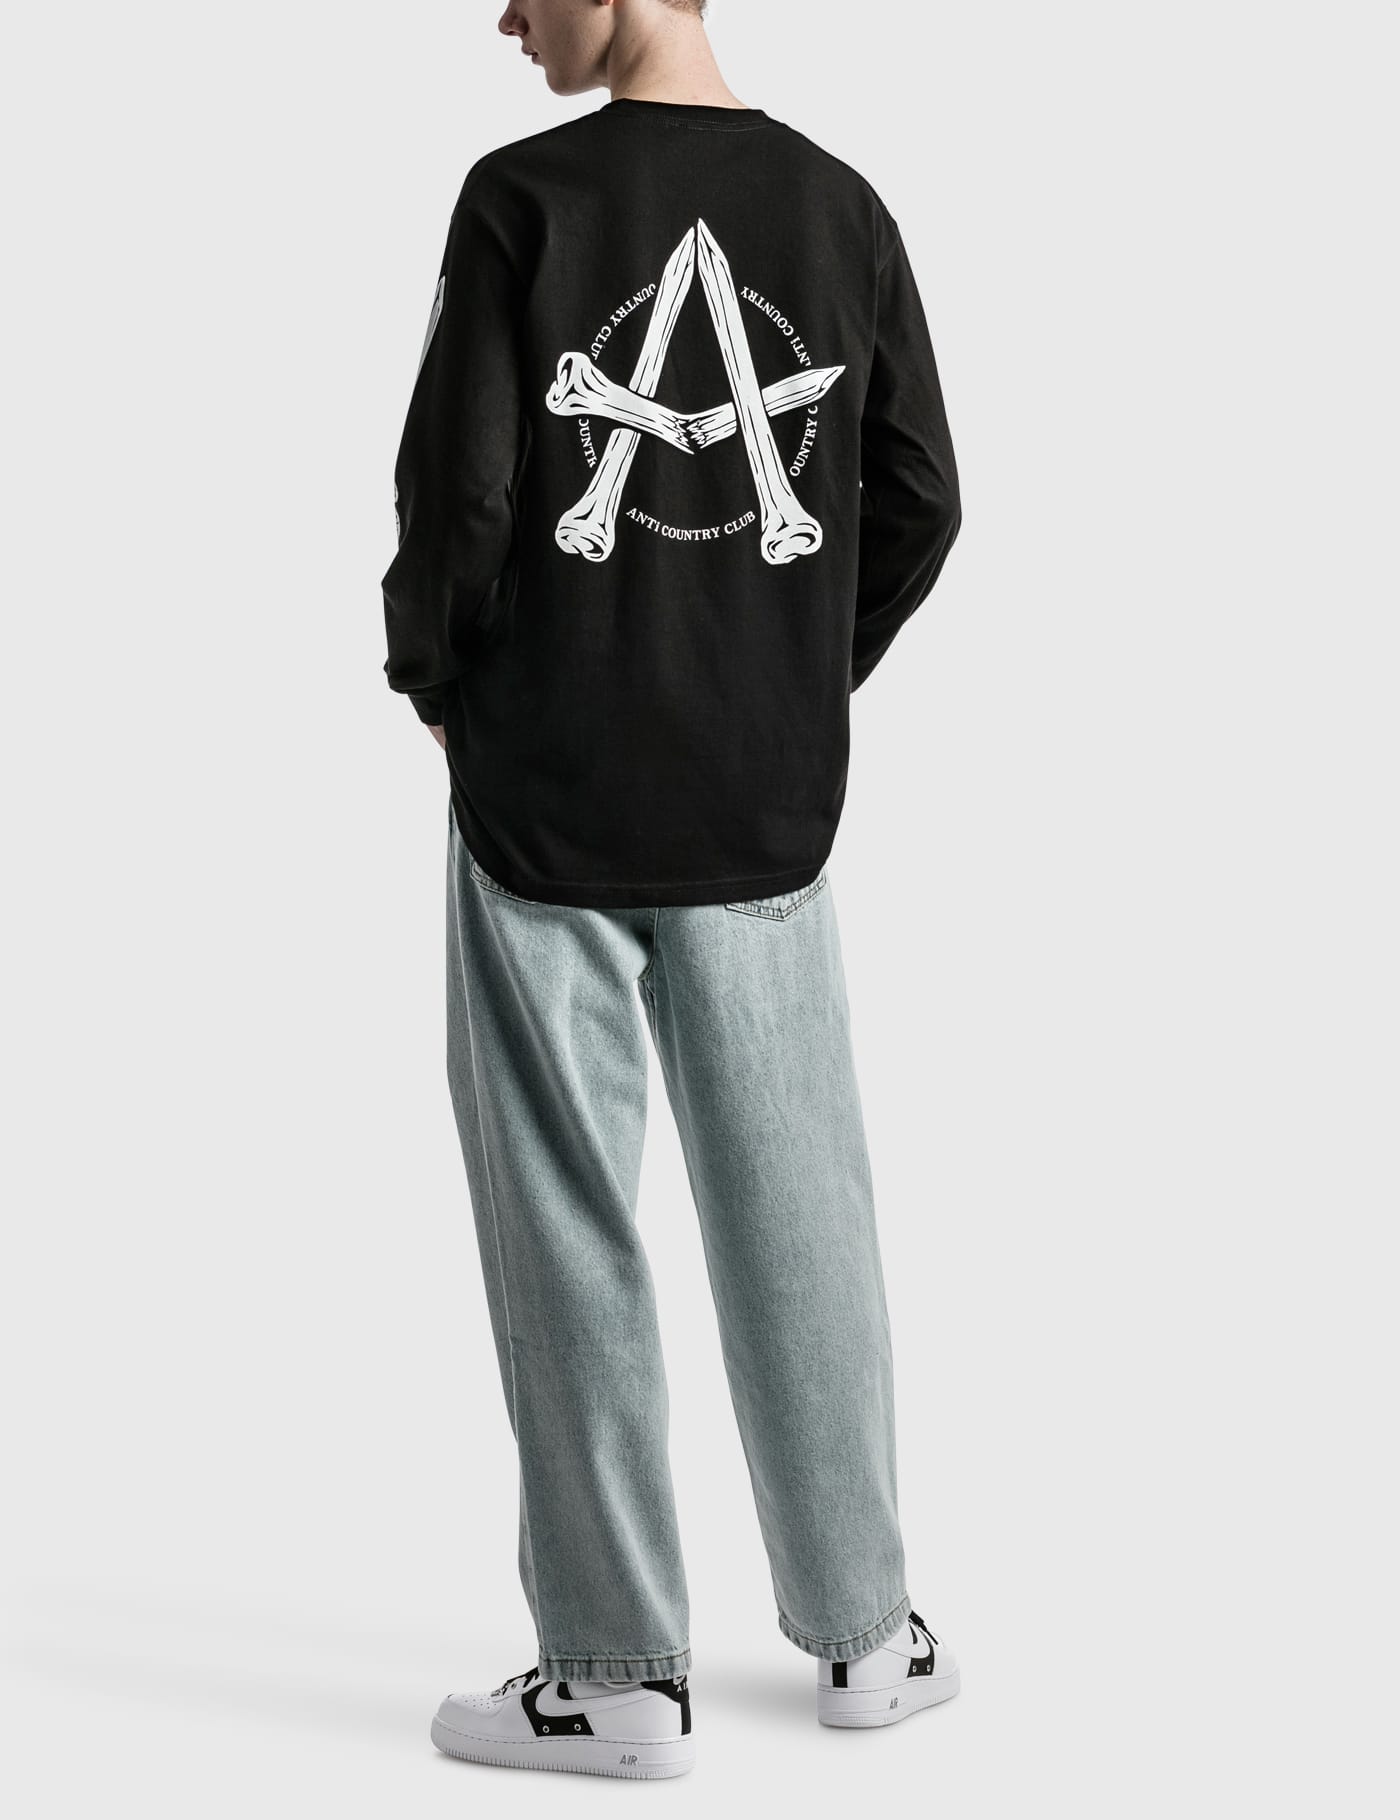 ANTI COUNTRY CLUB TOKYO - Tokyo Anarchy Logo Sweatshirt | HBX 